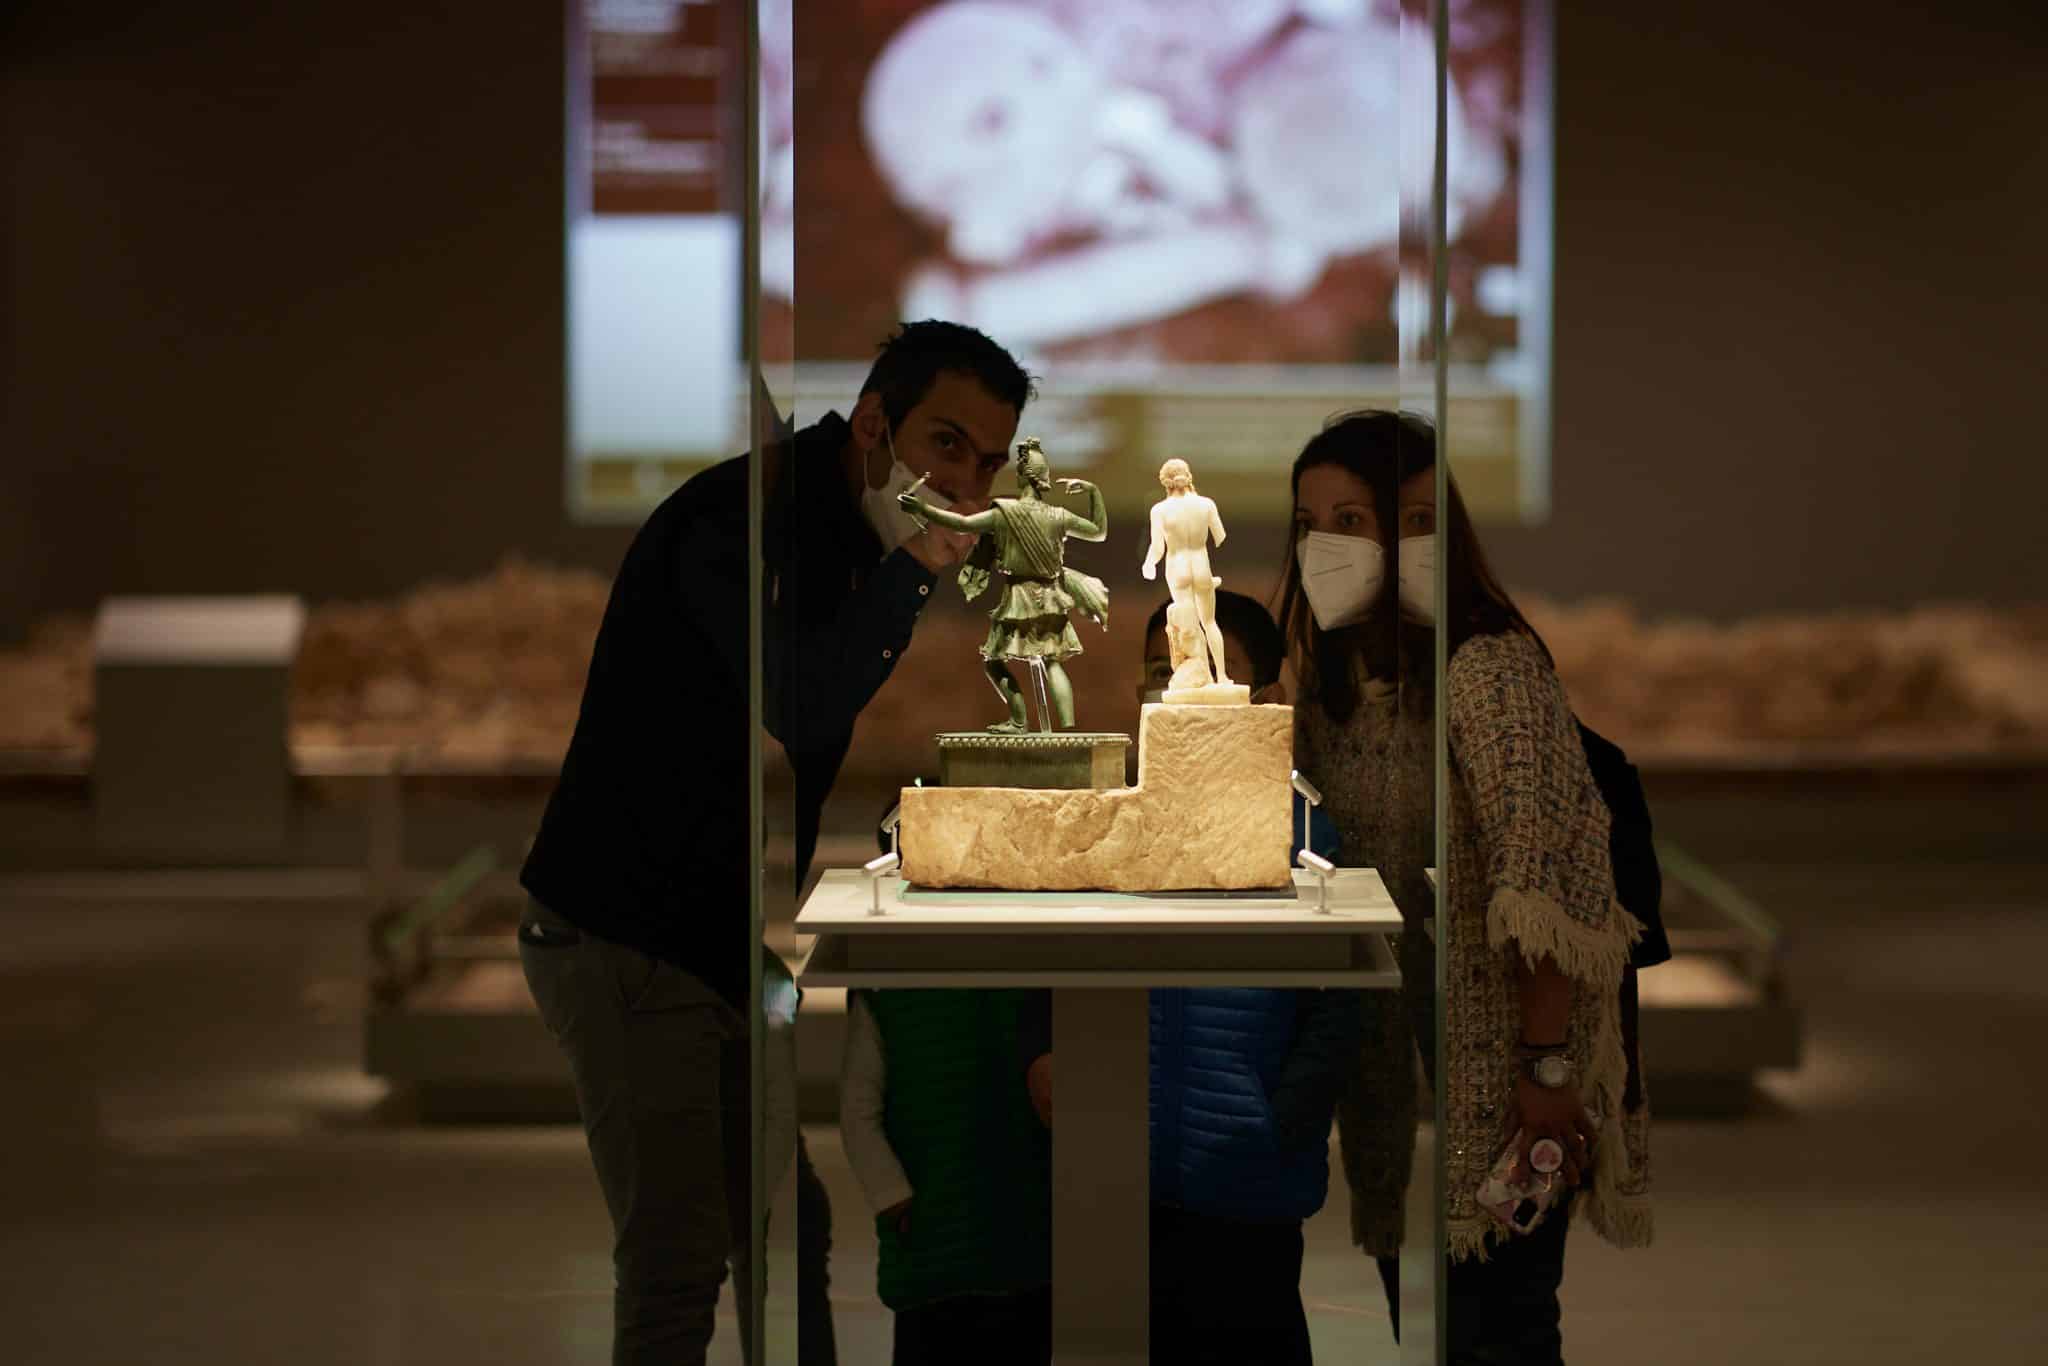 5569282 scaled - Σαγηνεύουν οι εικόνες από το νέο Αρχαιολογικό Μουσείο Χανίων (εικόνες & βίντεο)